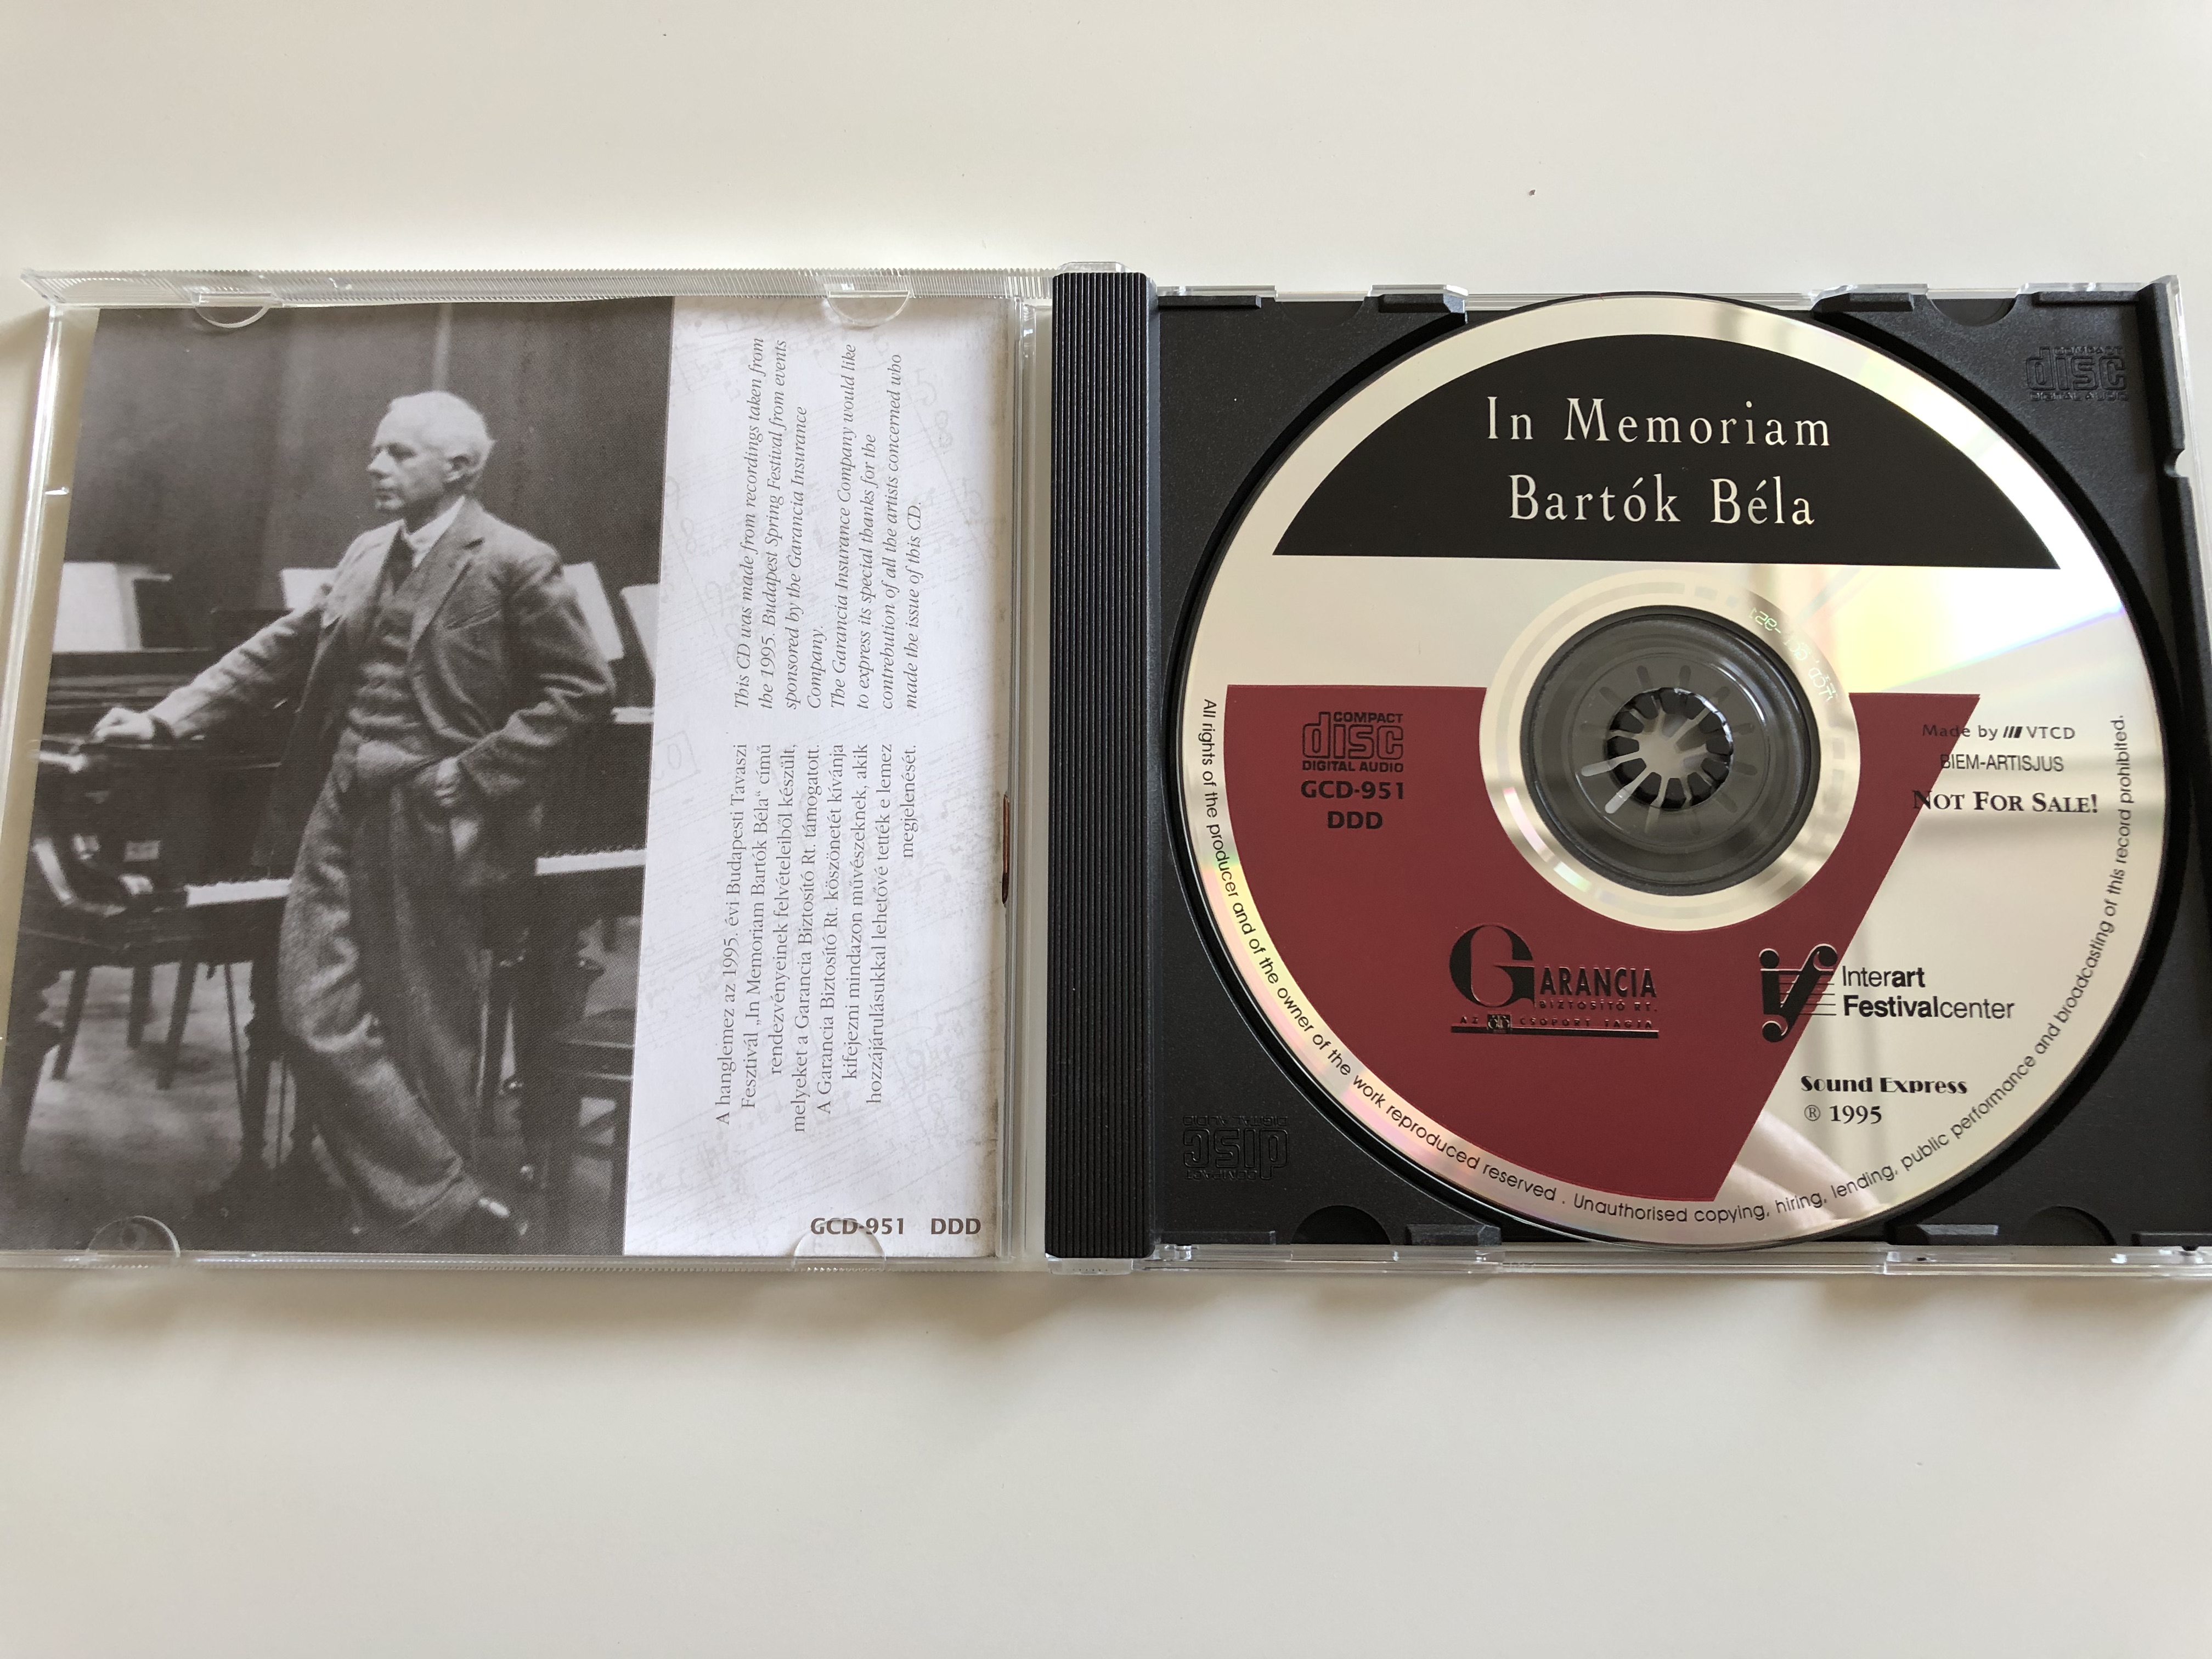 in-memoriam-bart-k-b-la-sound-express-audio-cd-1995-gcd-951-9-.jpg